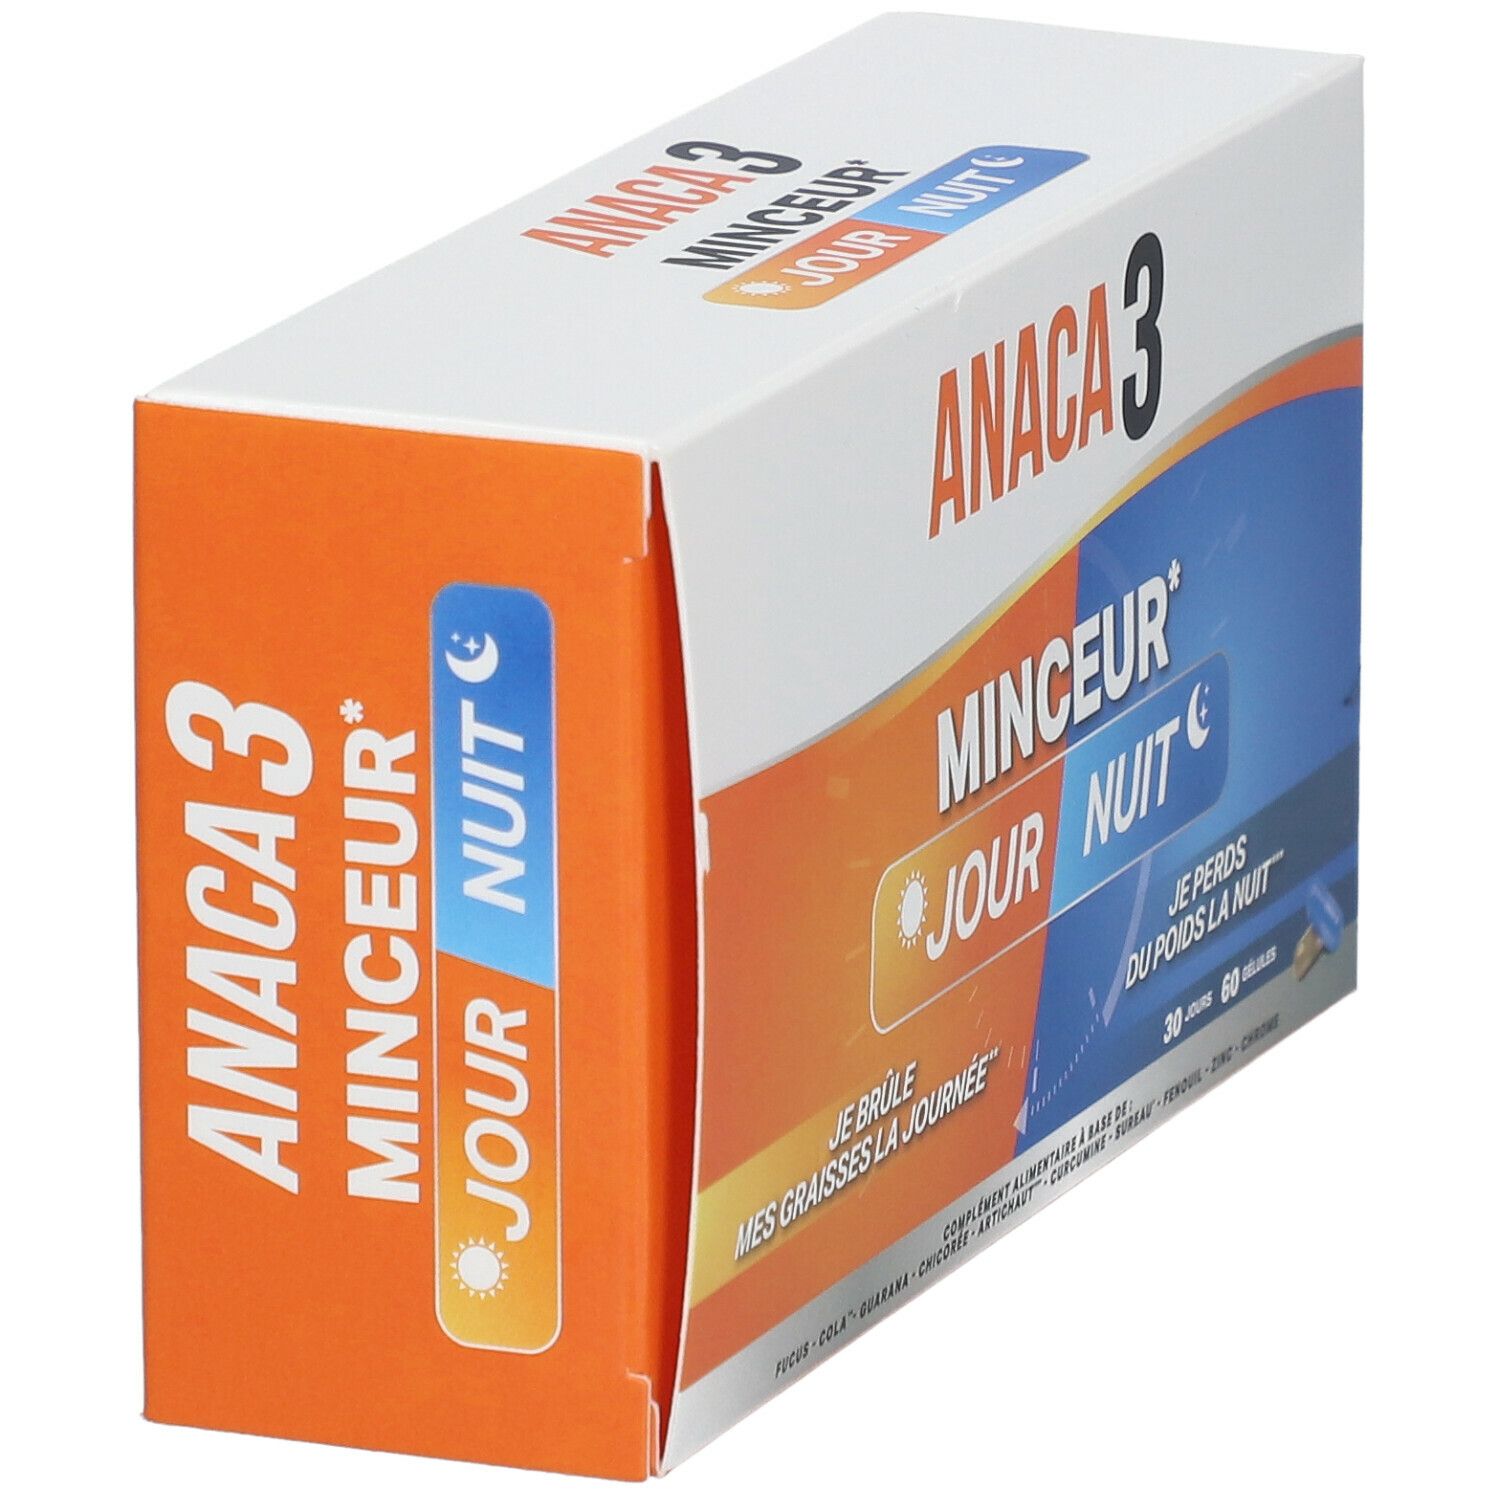 ANACA3 Minceur Jour/Nuit 60 pc(s) - Redcare Pharmacie